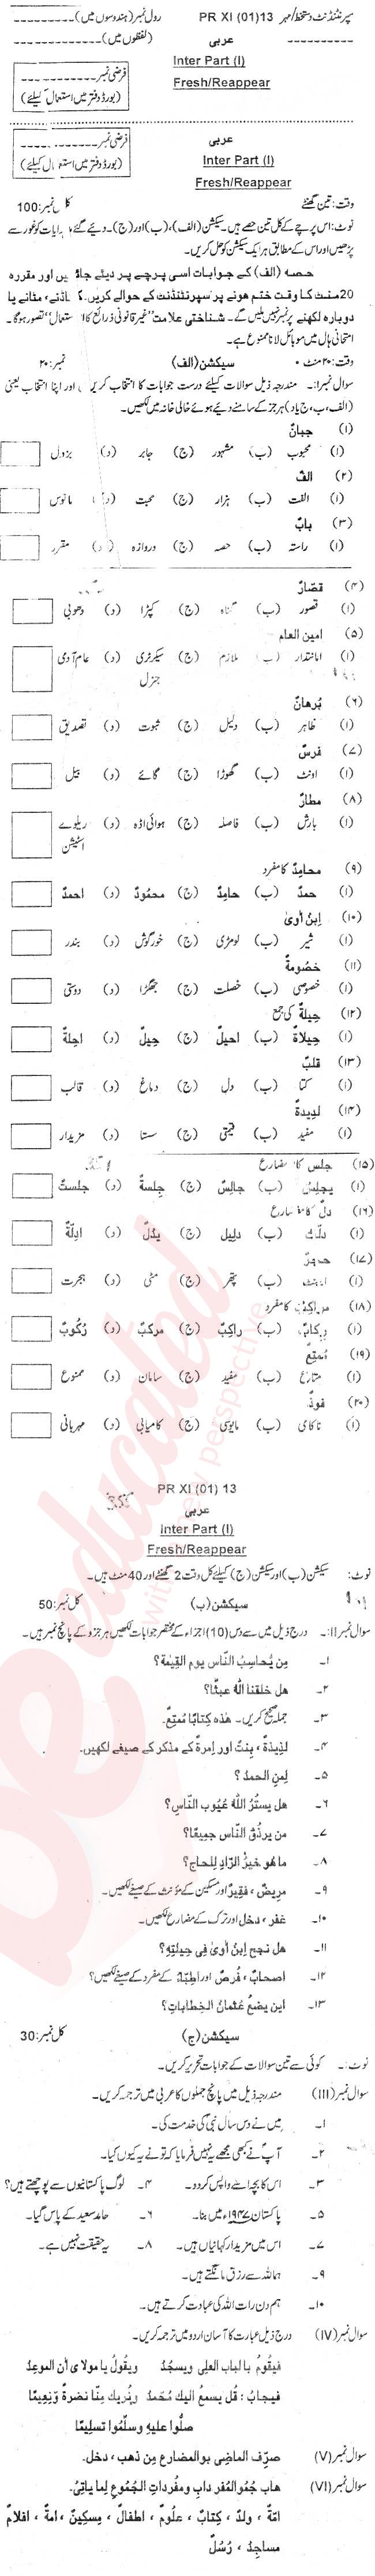 Arabic FA Part 1 Past Paper Group 1 BISE Mardan 2013